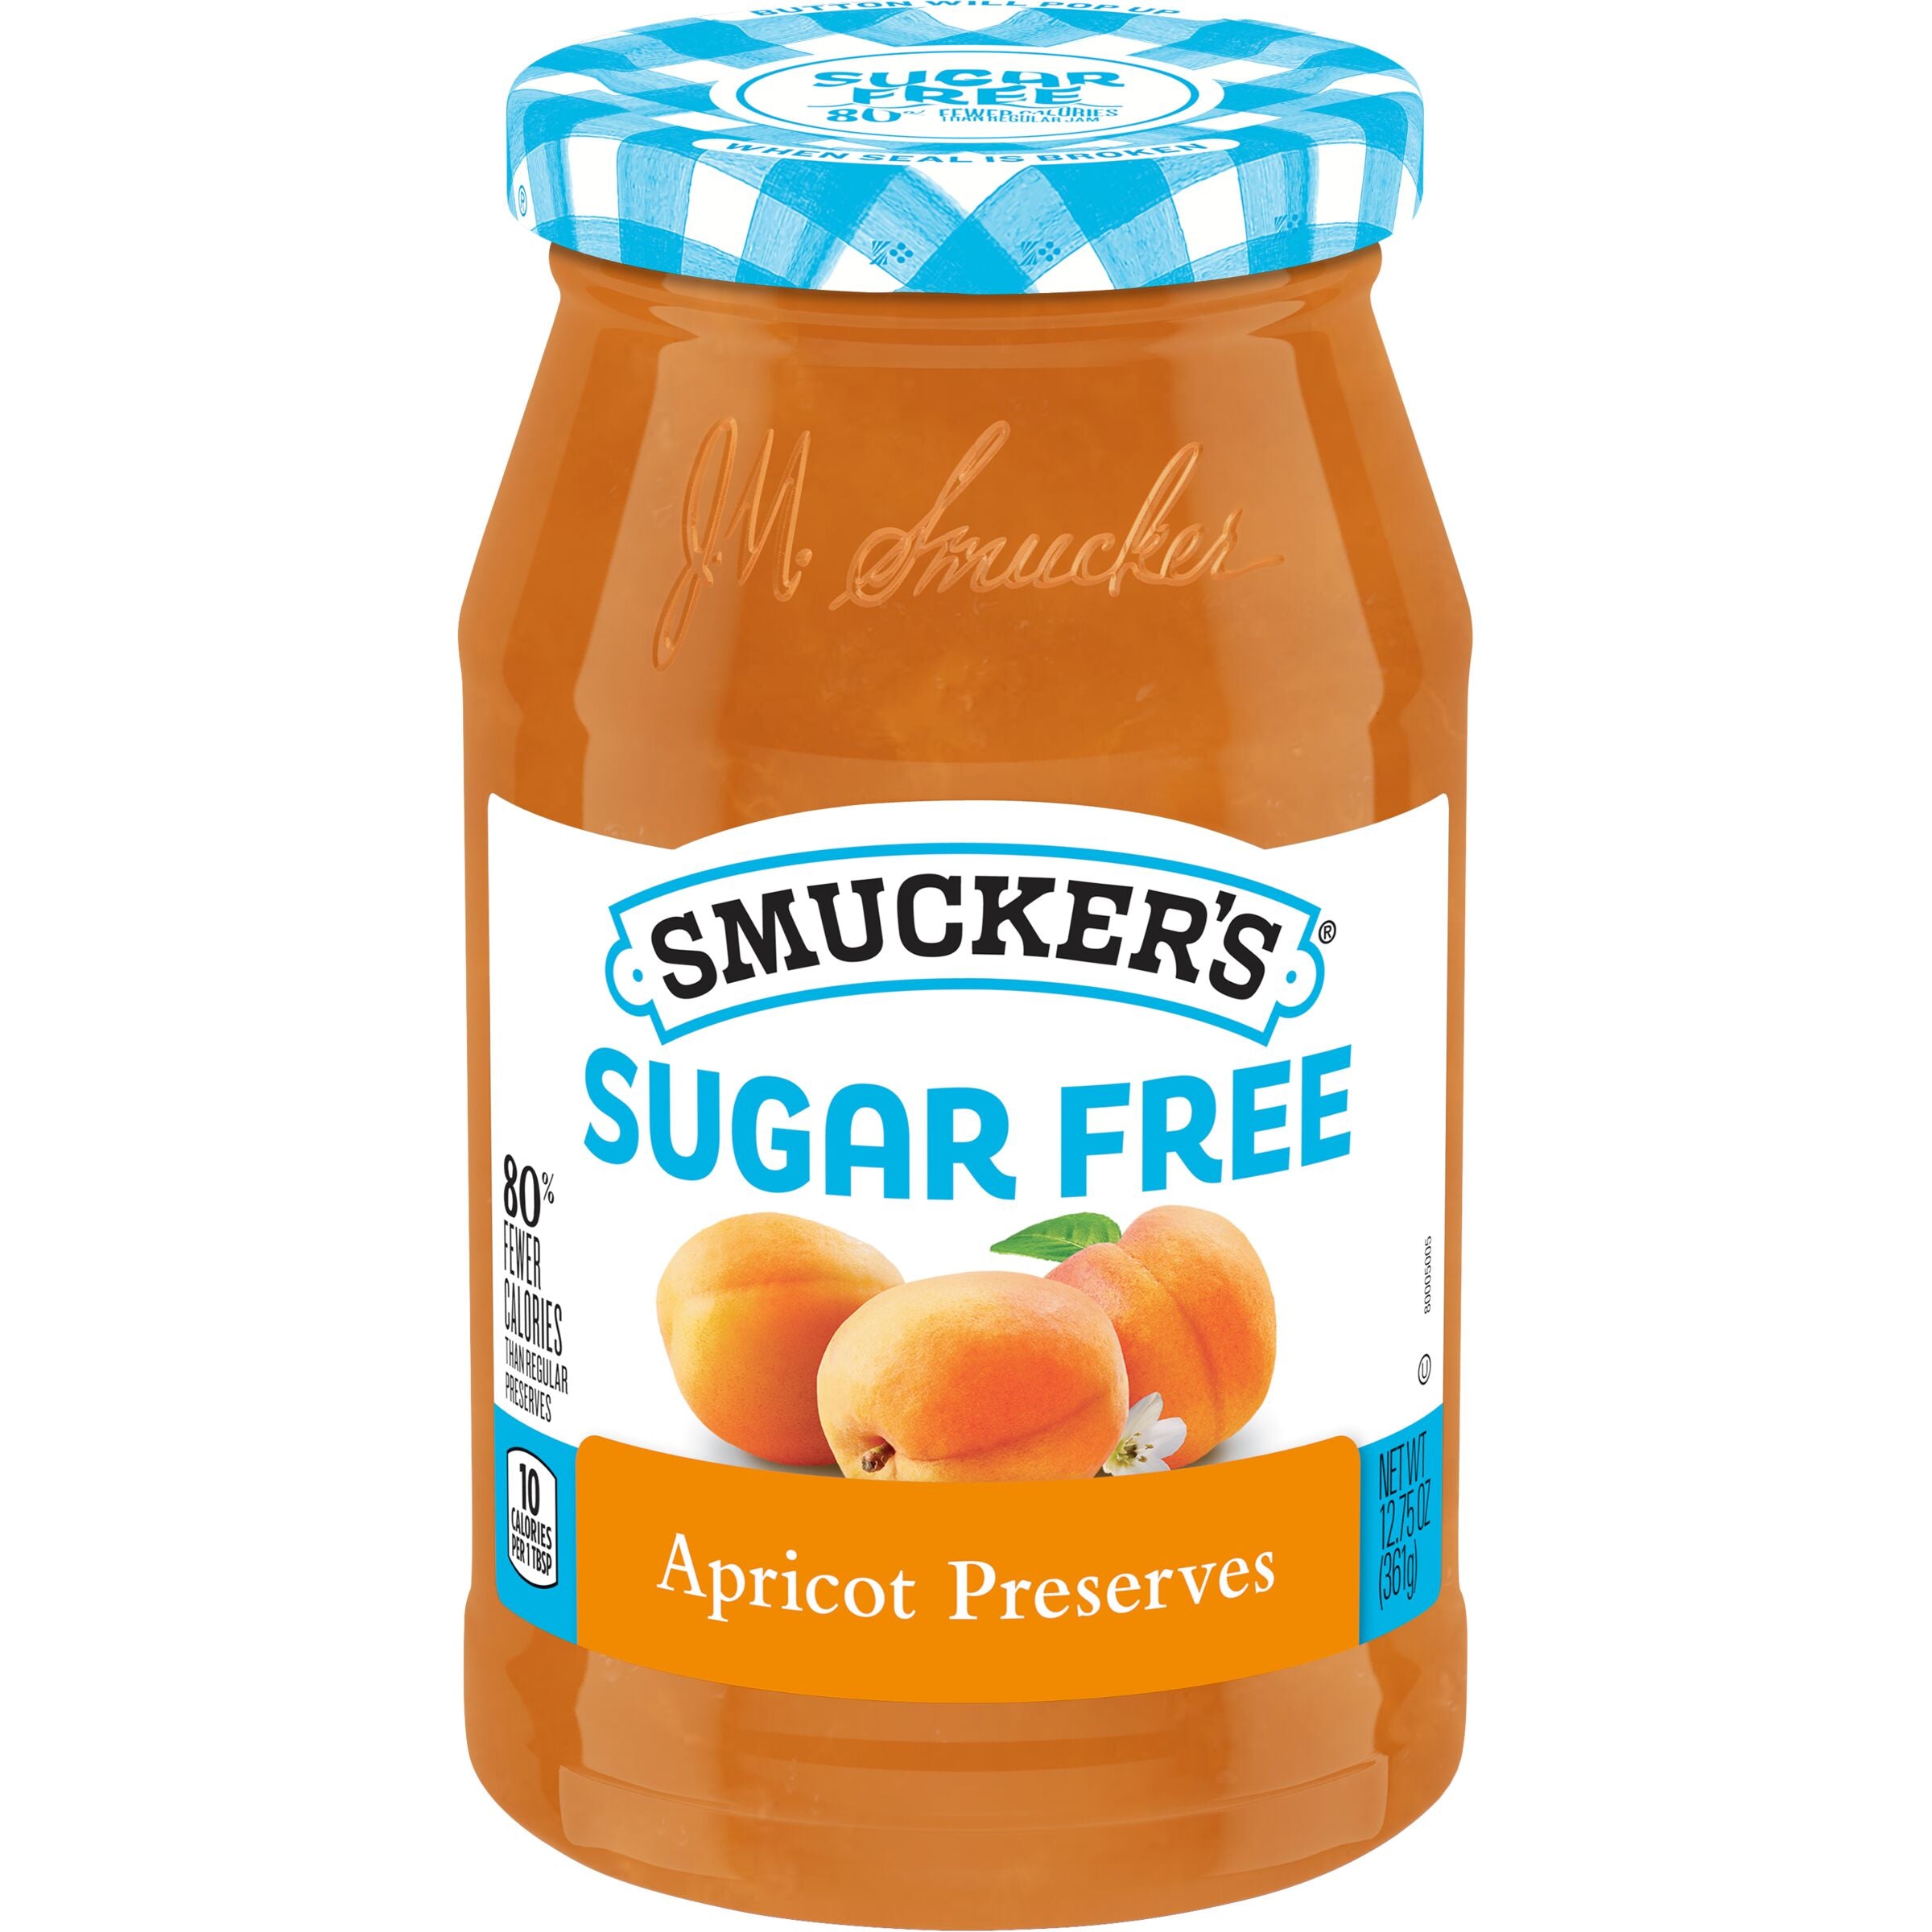 Smucker's Sugar Free Apricot Preserves with Splenda Brand Sweetener, 12.75 oz